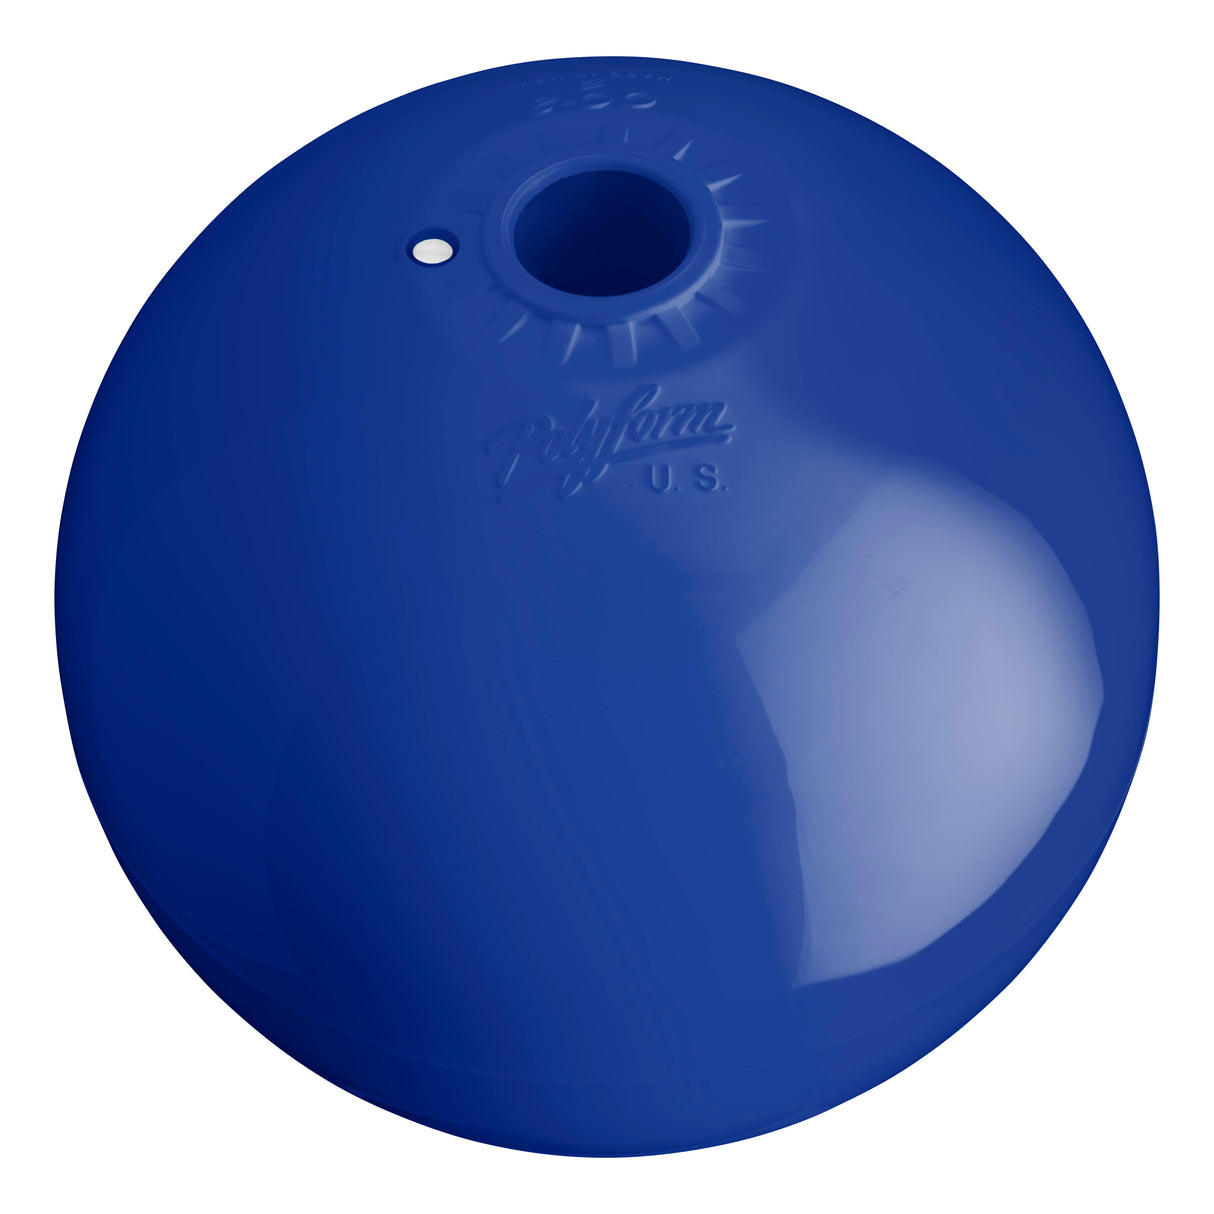 Hole through center mooring and marker buoy, Polyform CC-5 Cobalt Blue angled shot